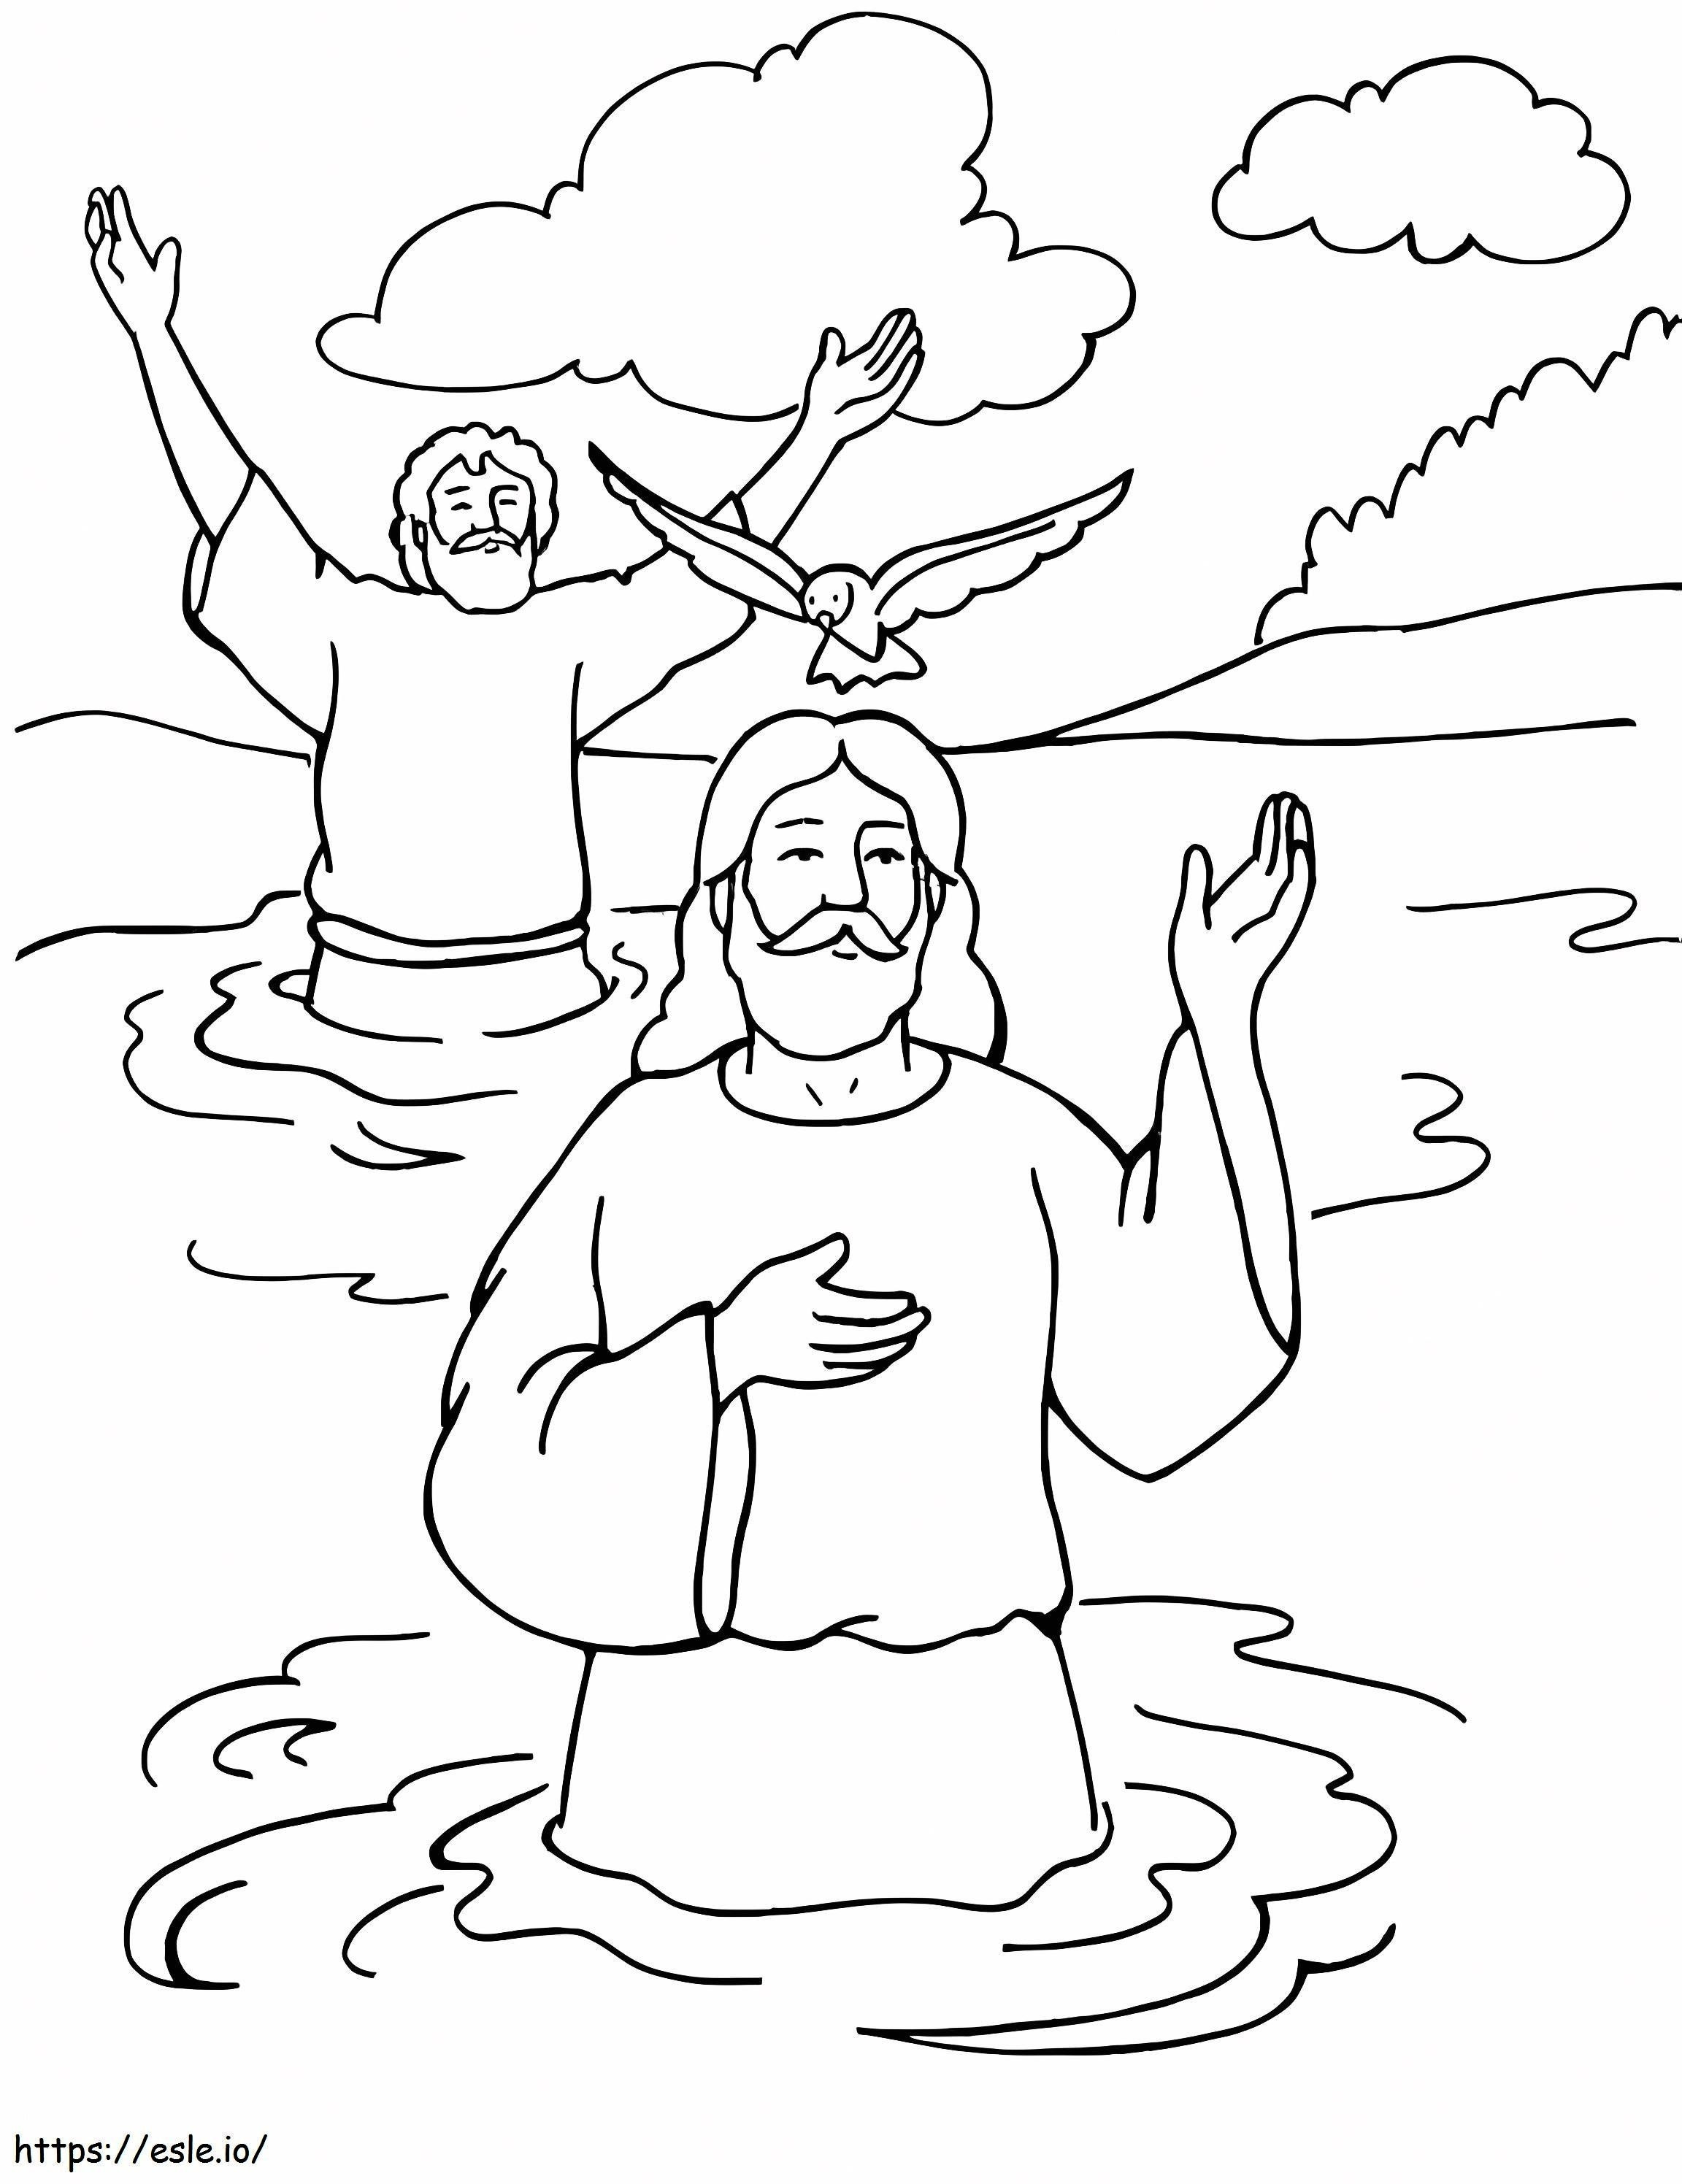 Taufe Christi ausmalbilder